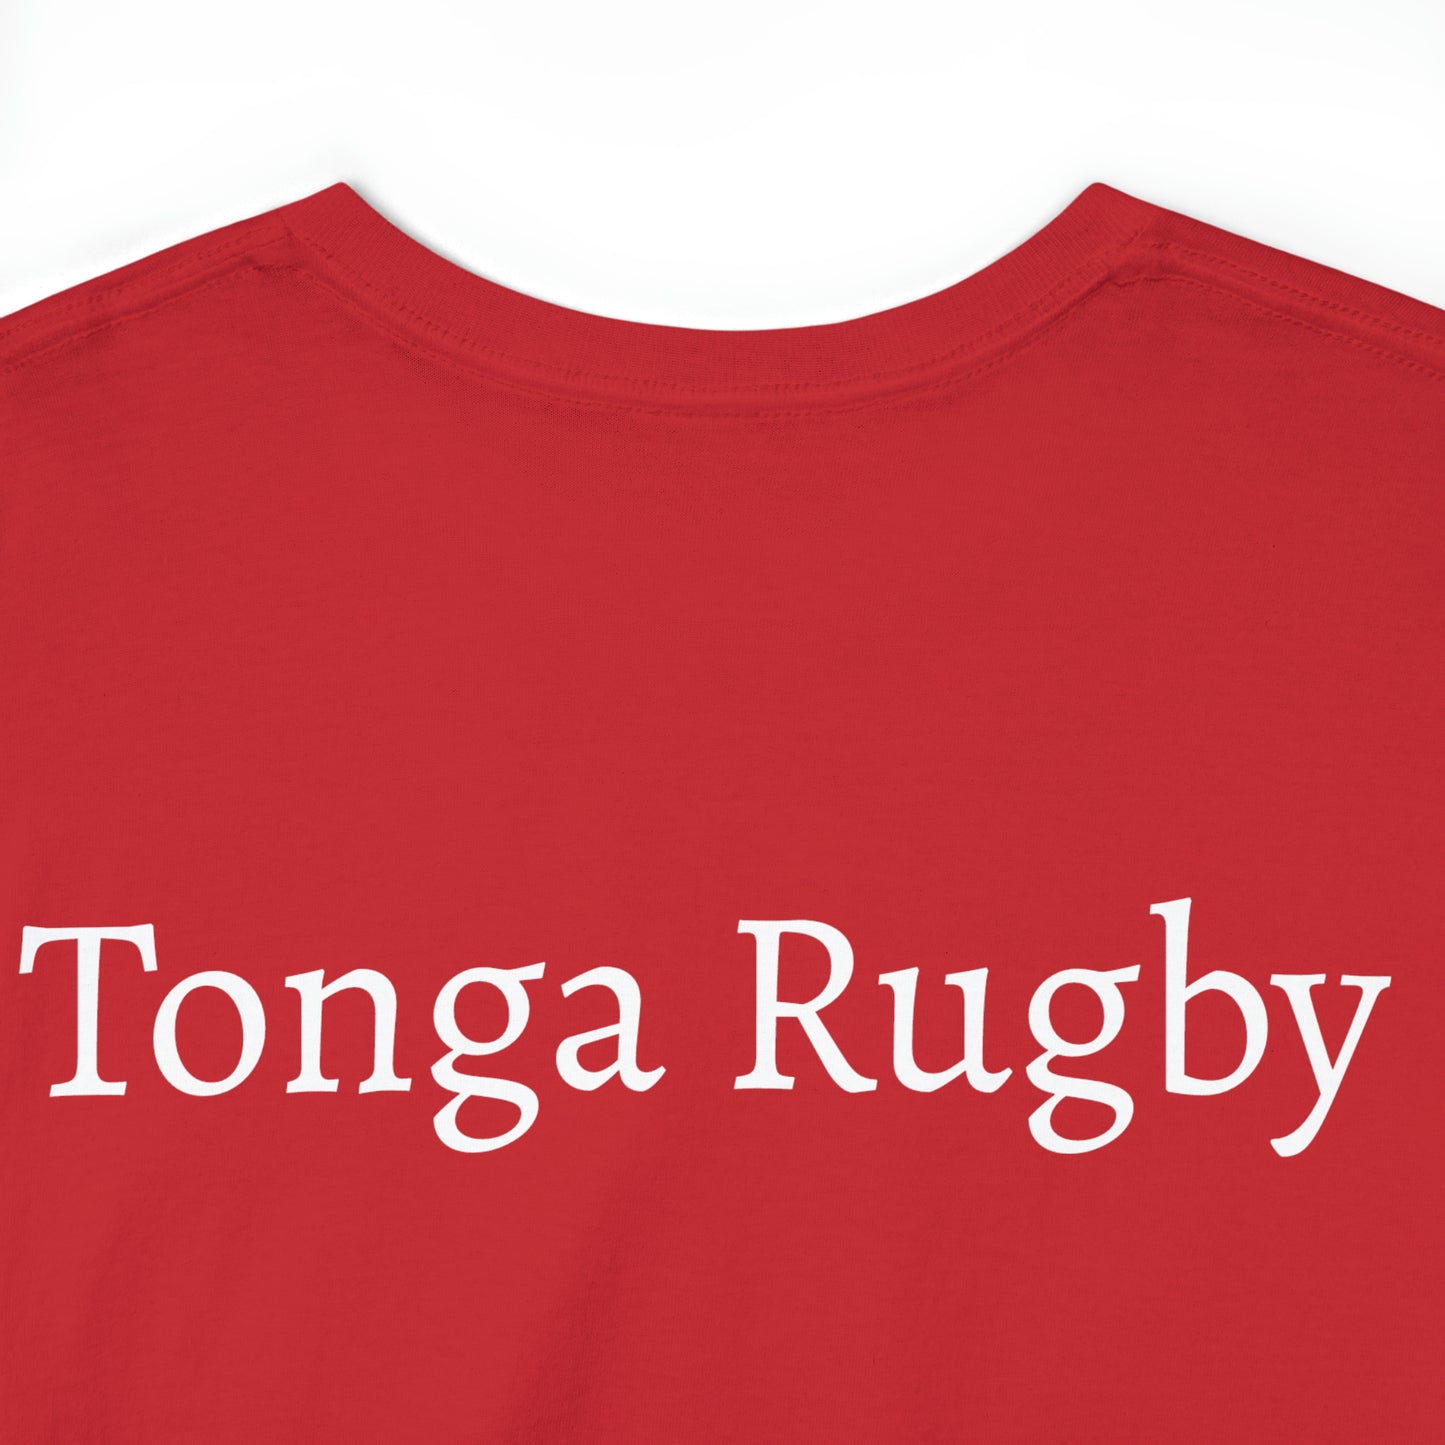 Tonga lifting the RWC - dark shirts